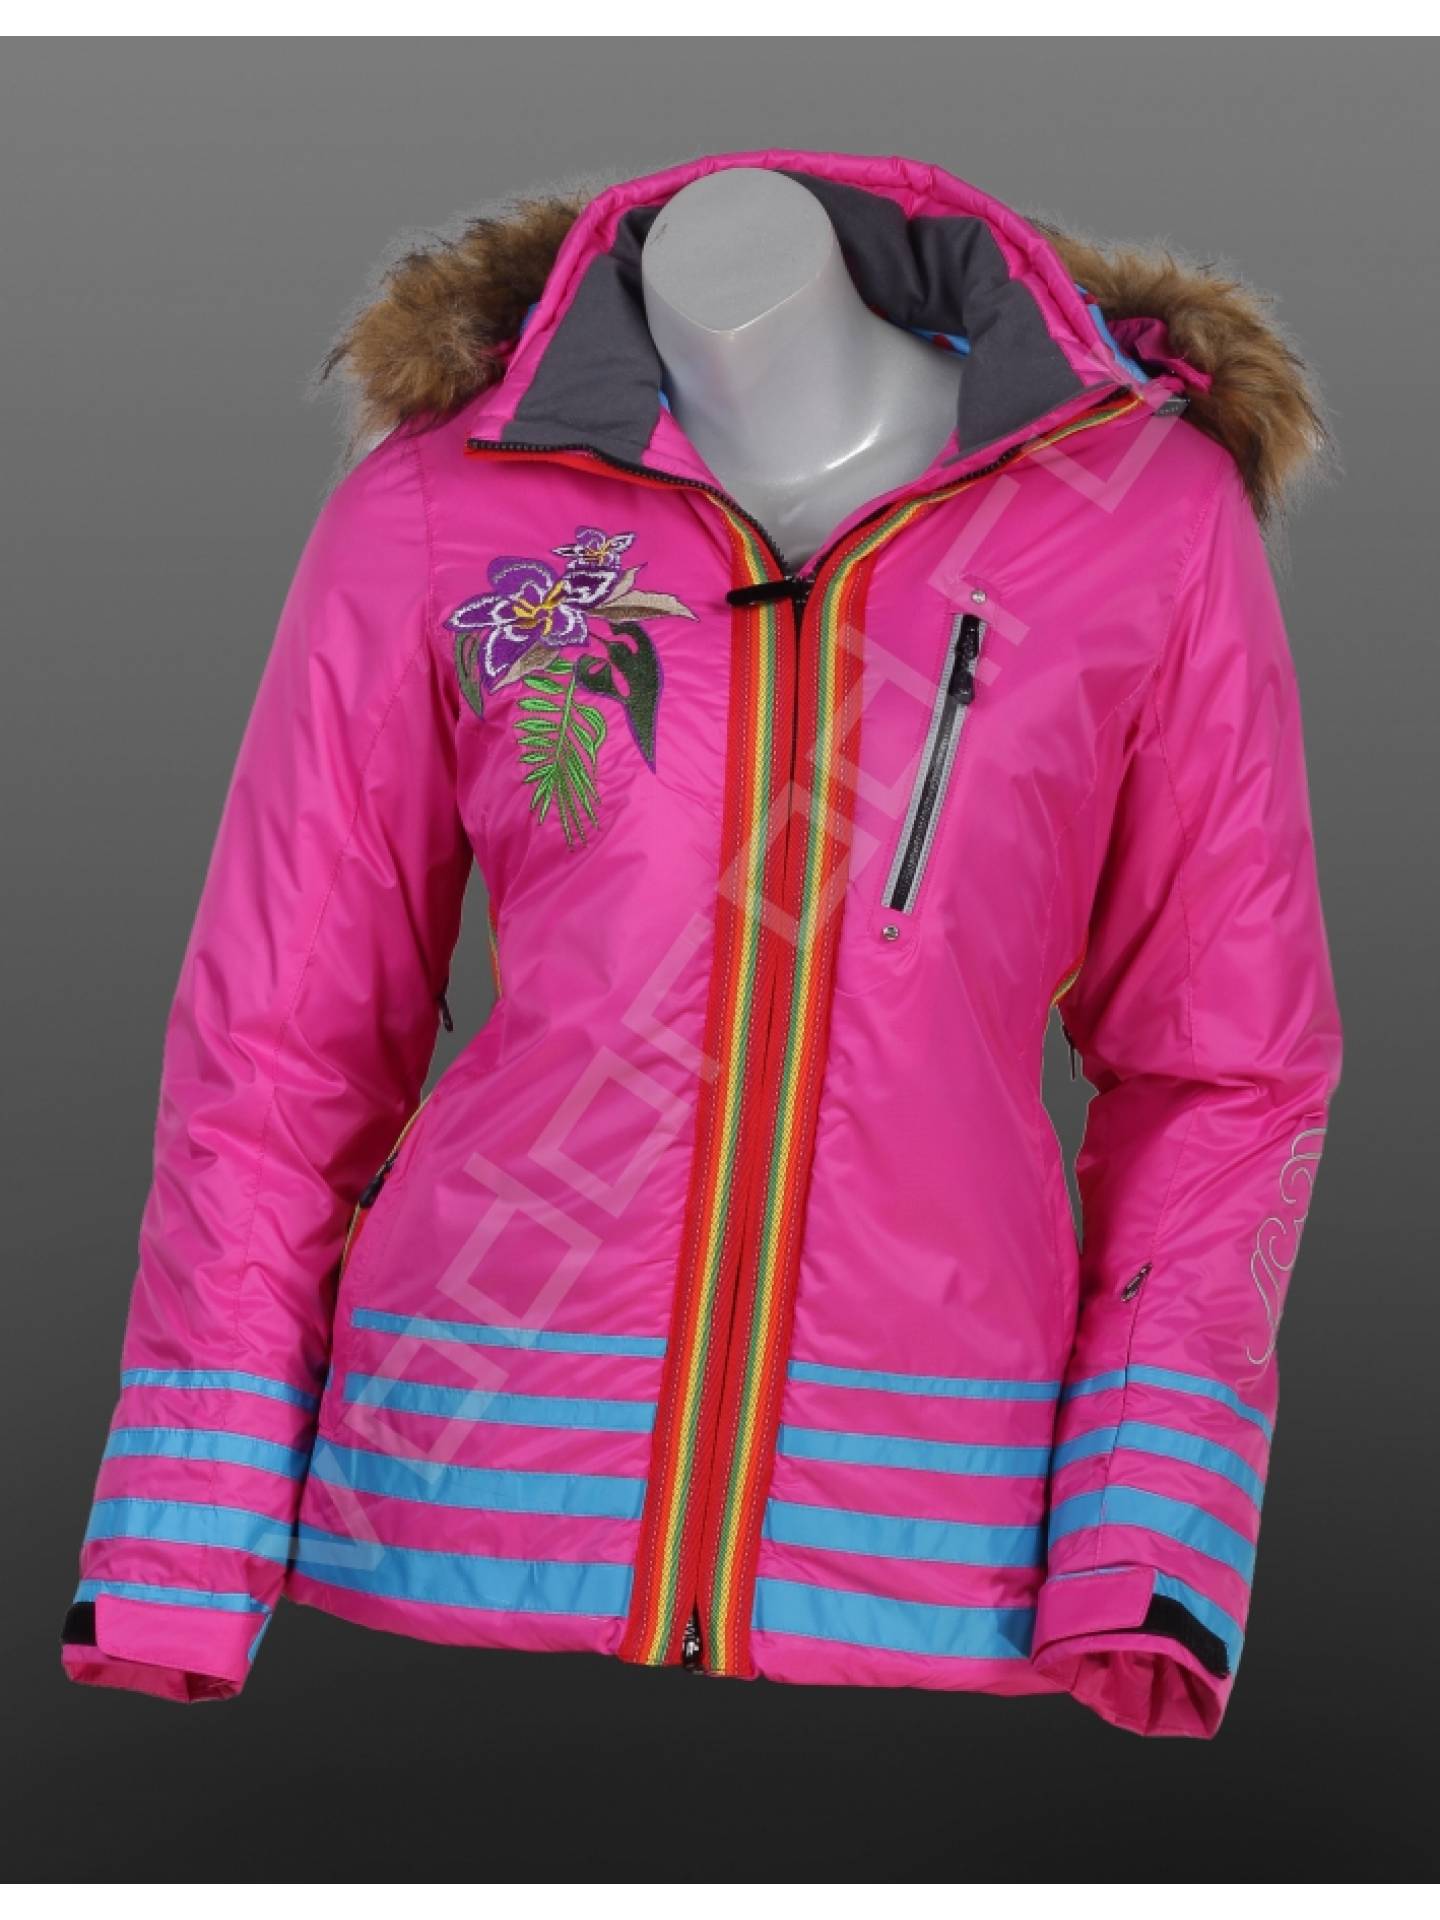 Розовая горнолыжная куртка